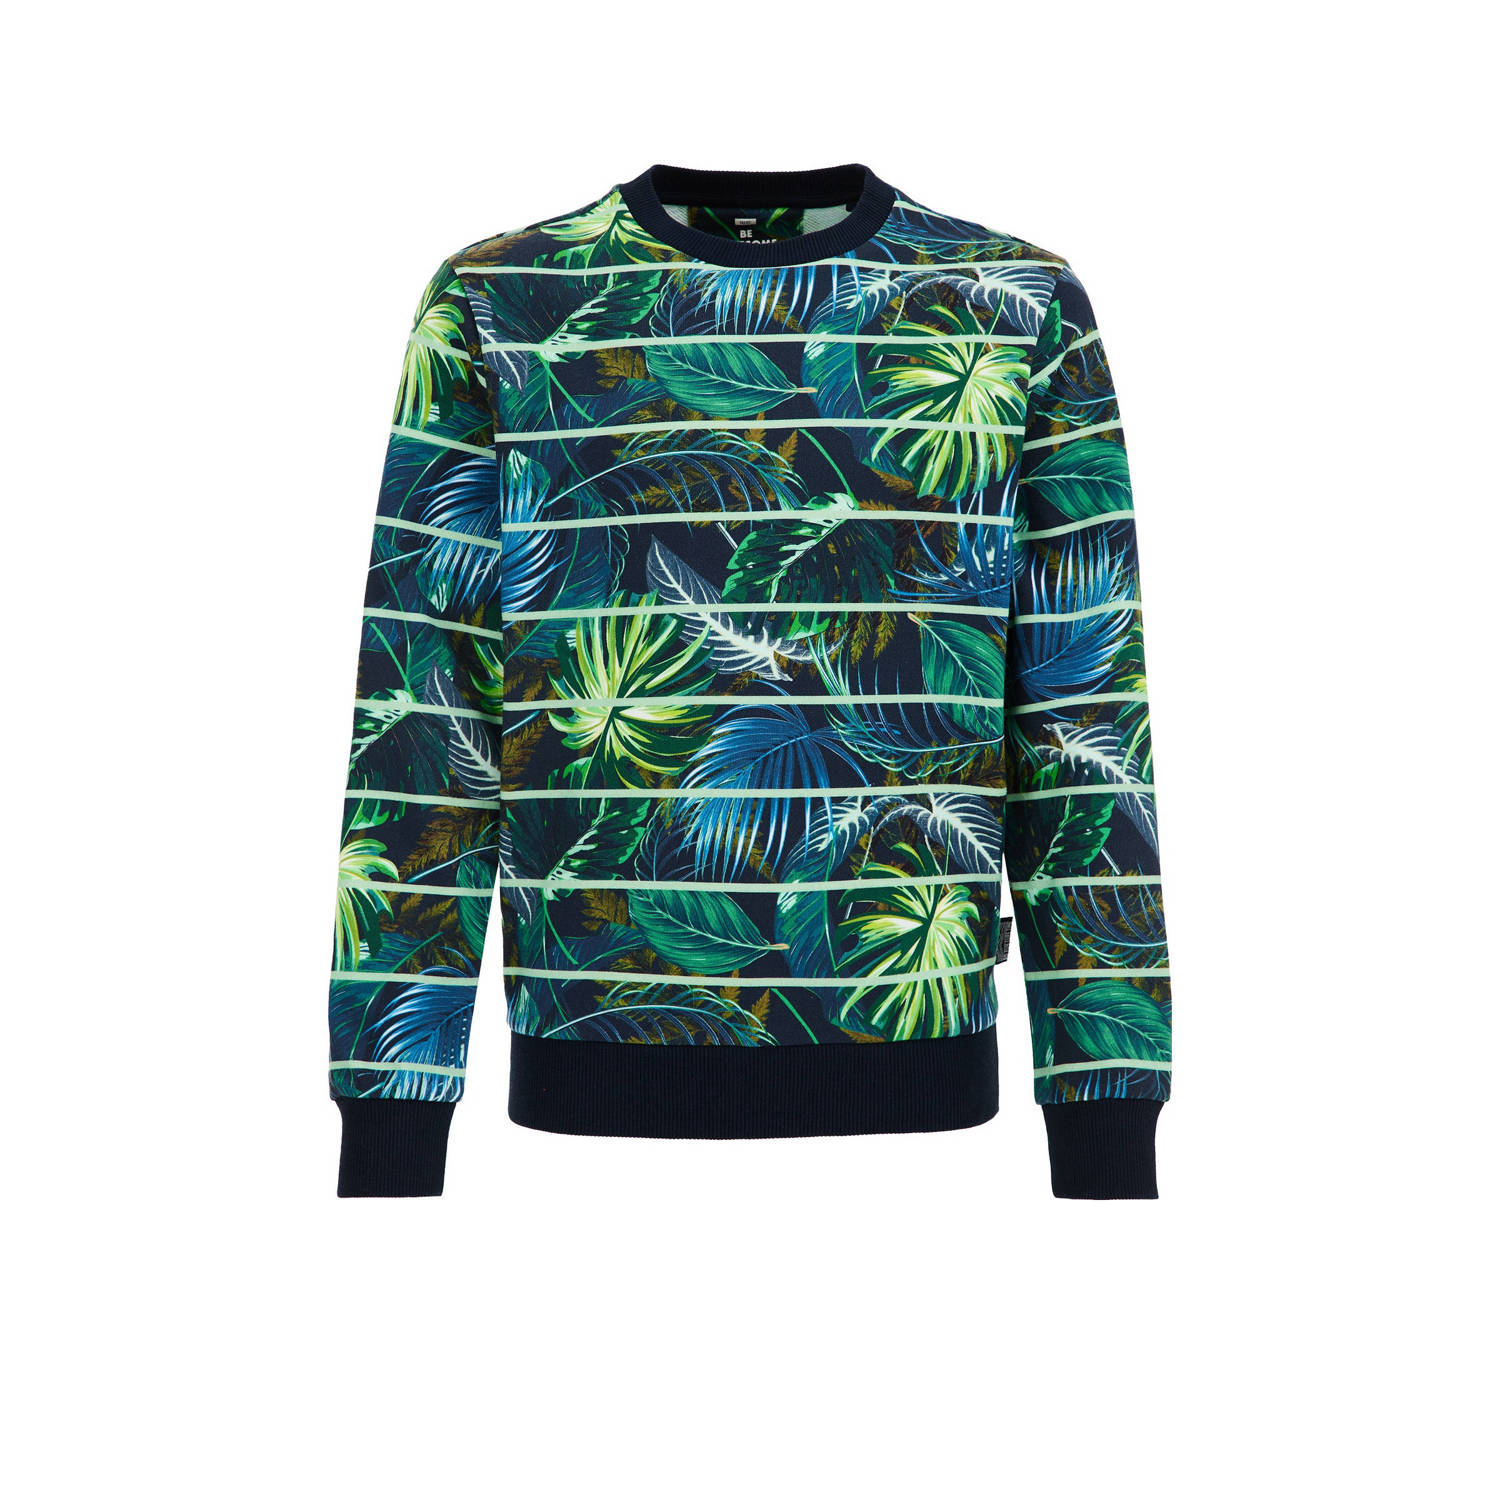 WE Fashion sweater met all over print groen blauw zwart Multi All over print 122 128